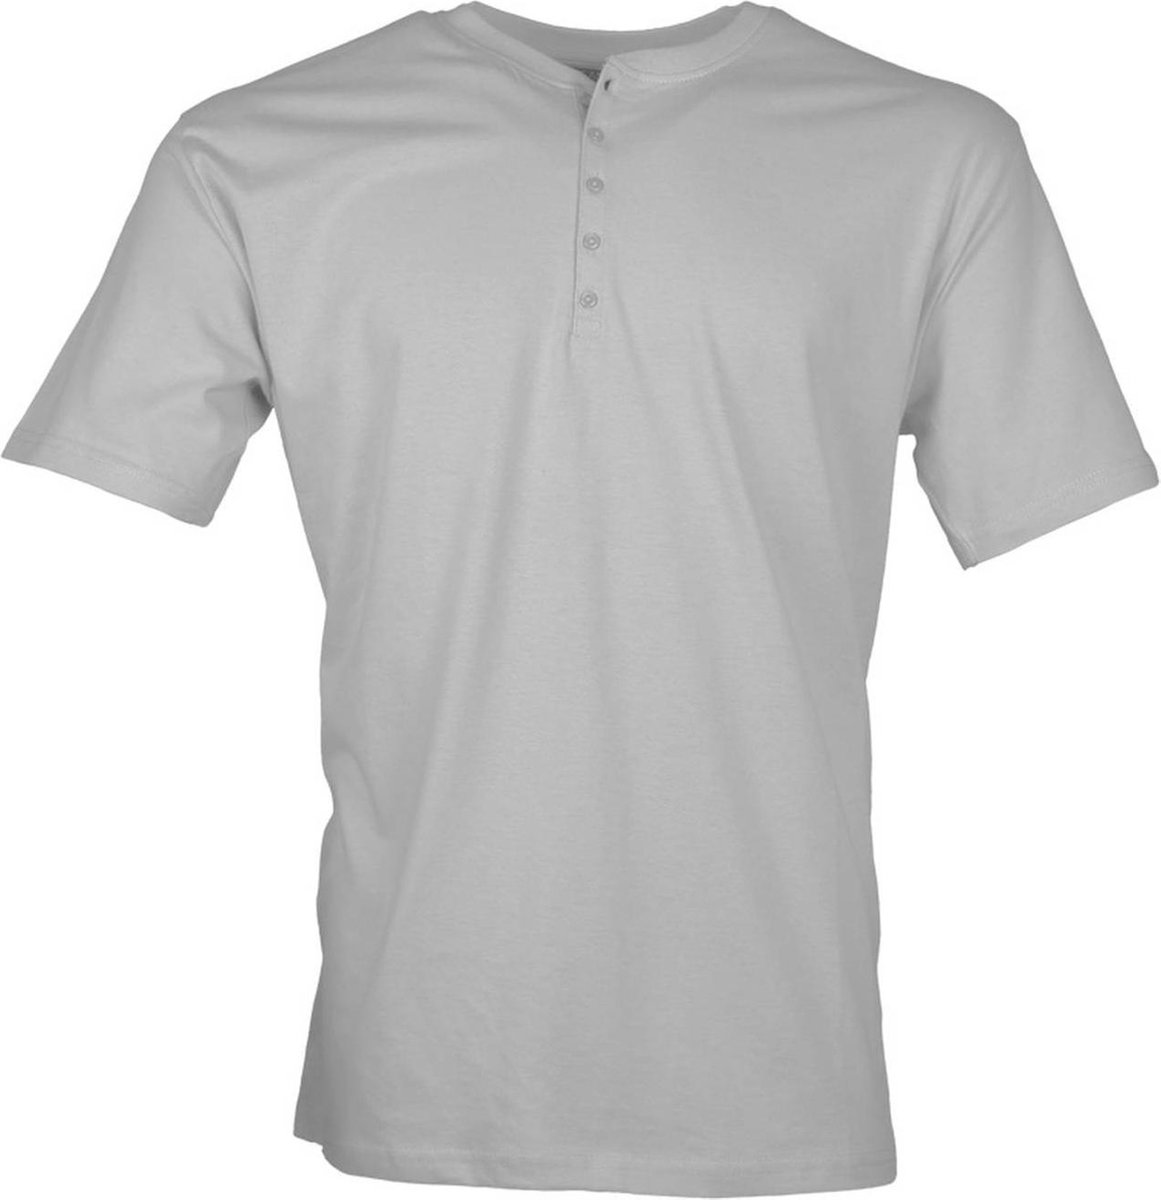 Losan Basic - Heren T-Shirt - Korte Mouw - Ronde Hals - Knoopjes - Grijs - Maat XL